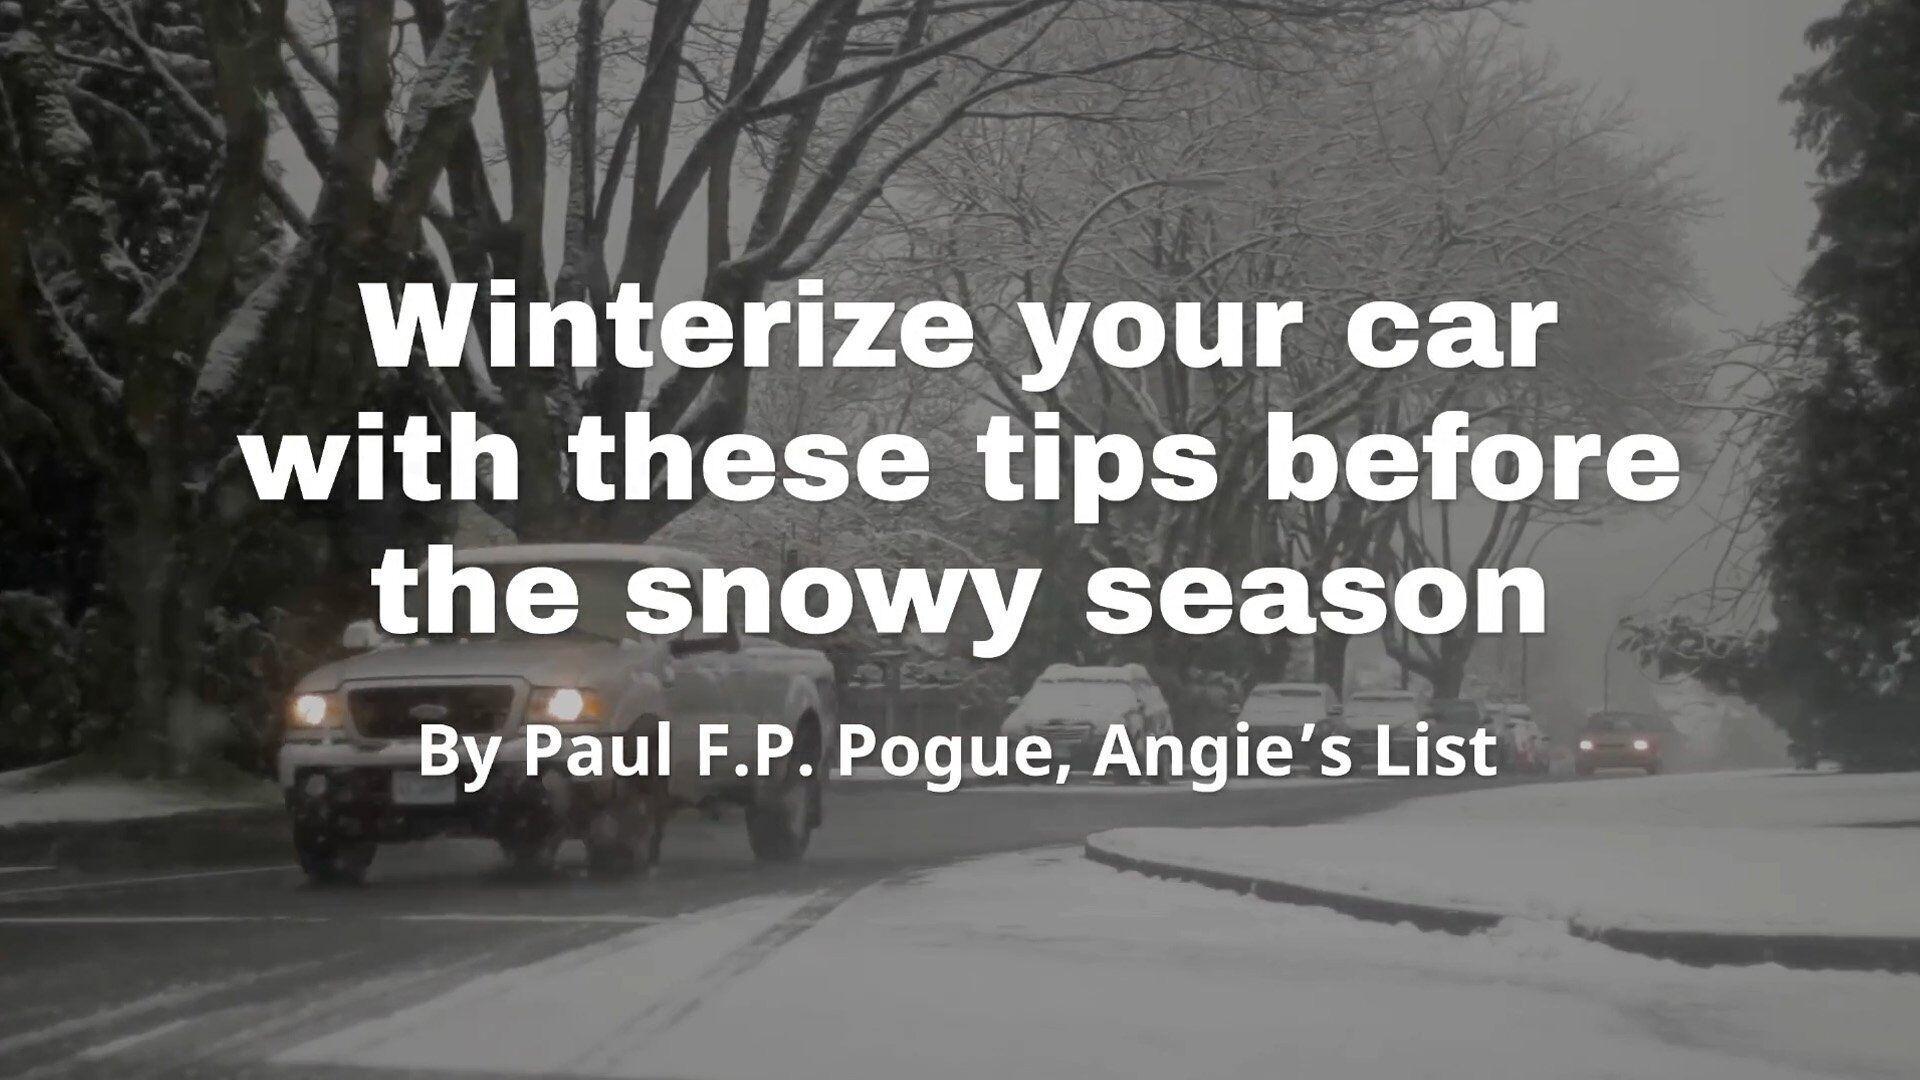 Snowpocalypse: Winterizing Your Car the Right Way - MotoIQ